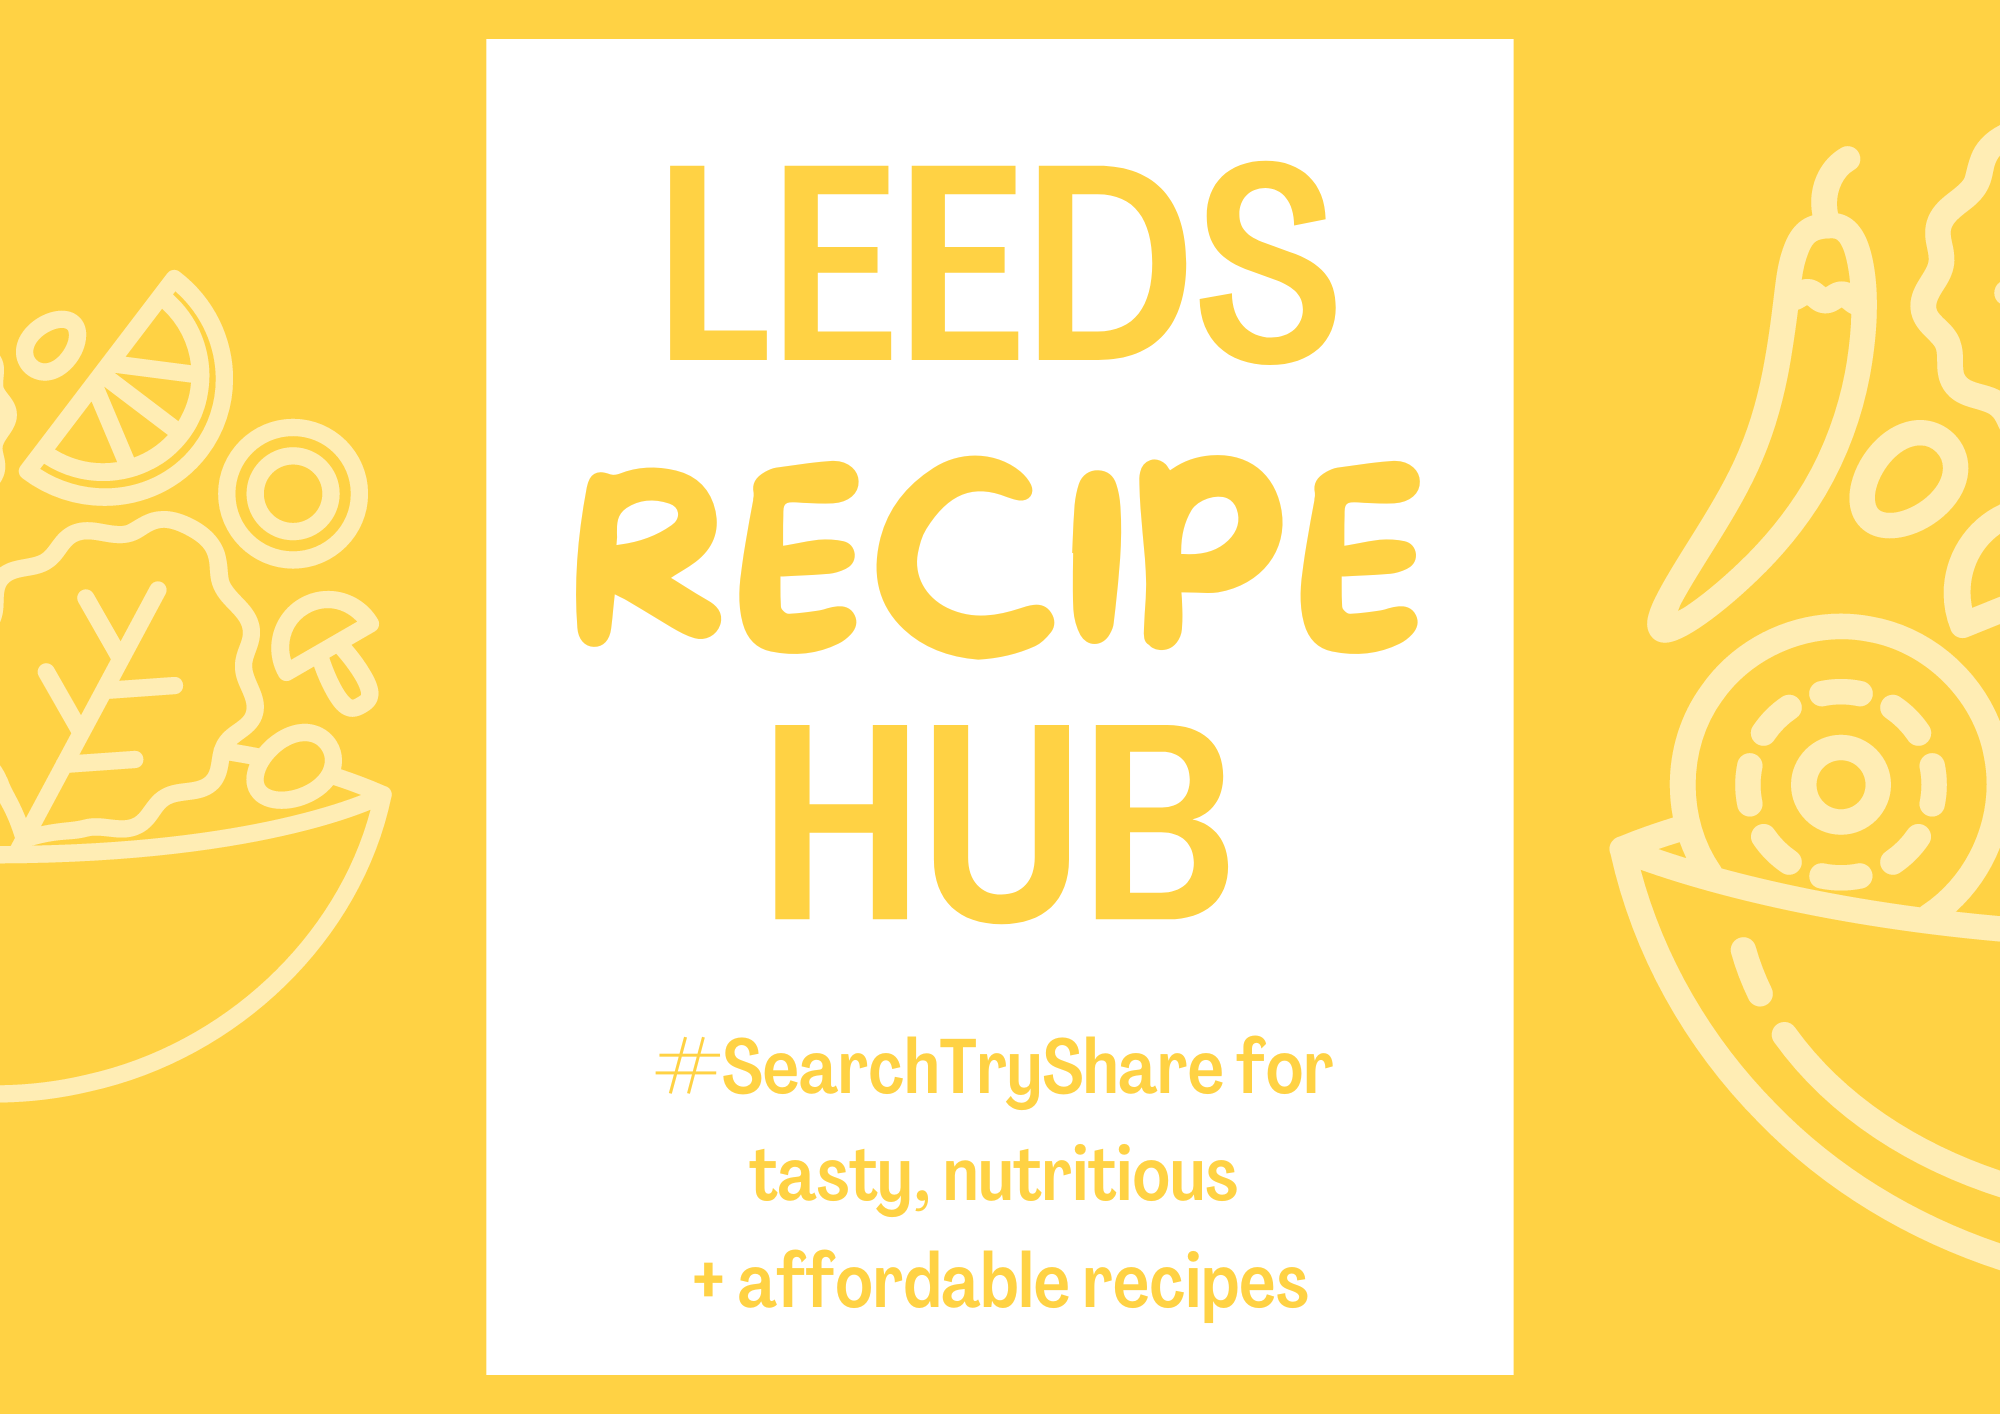 Leeds Recipe Hub Launches!